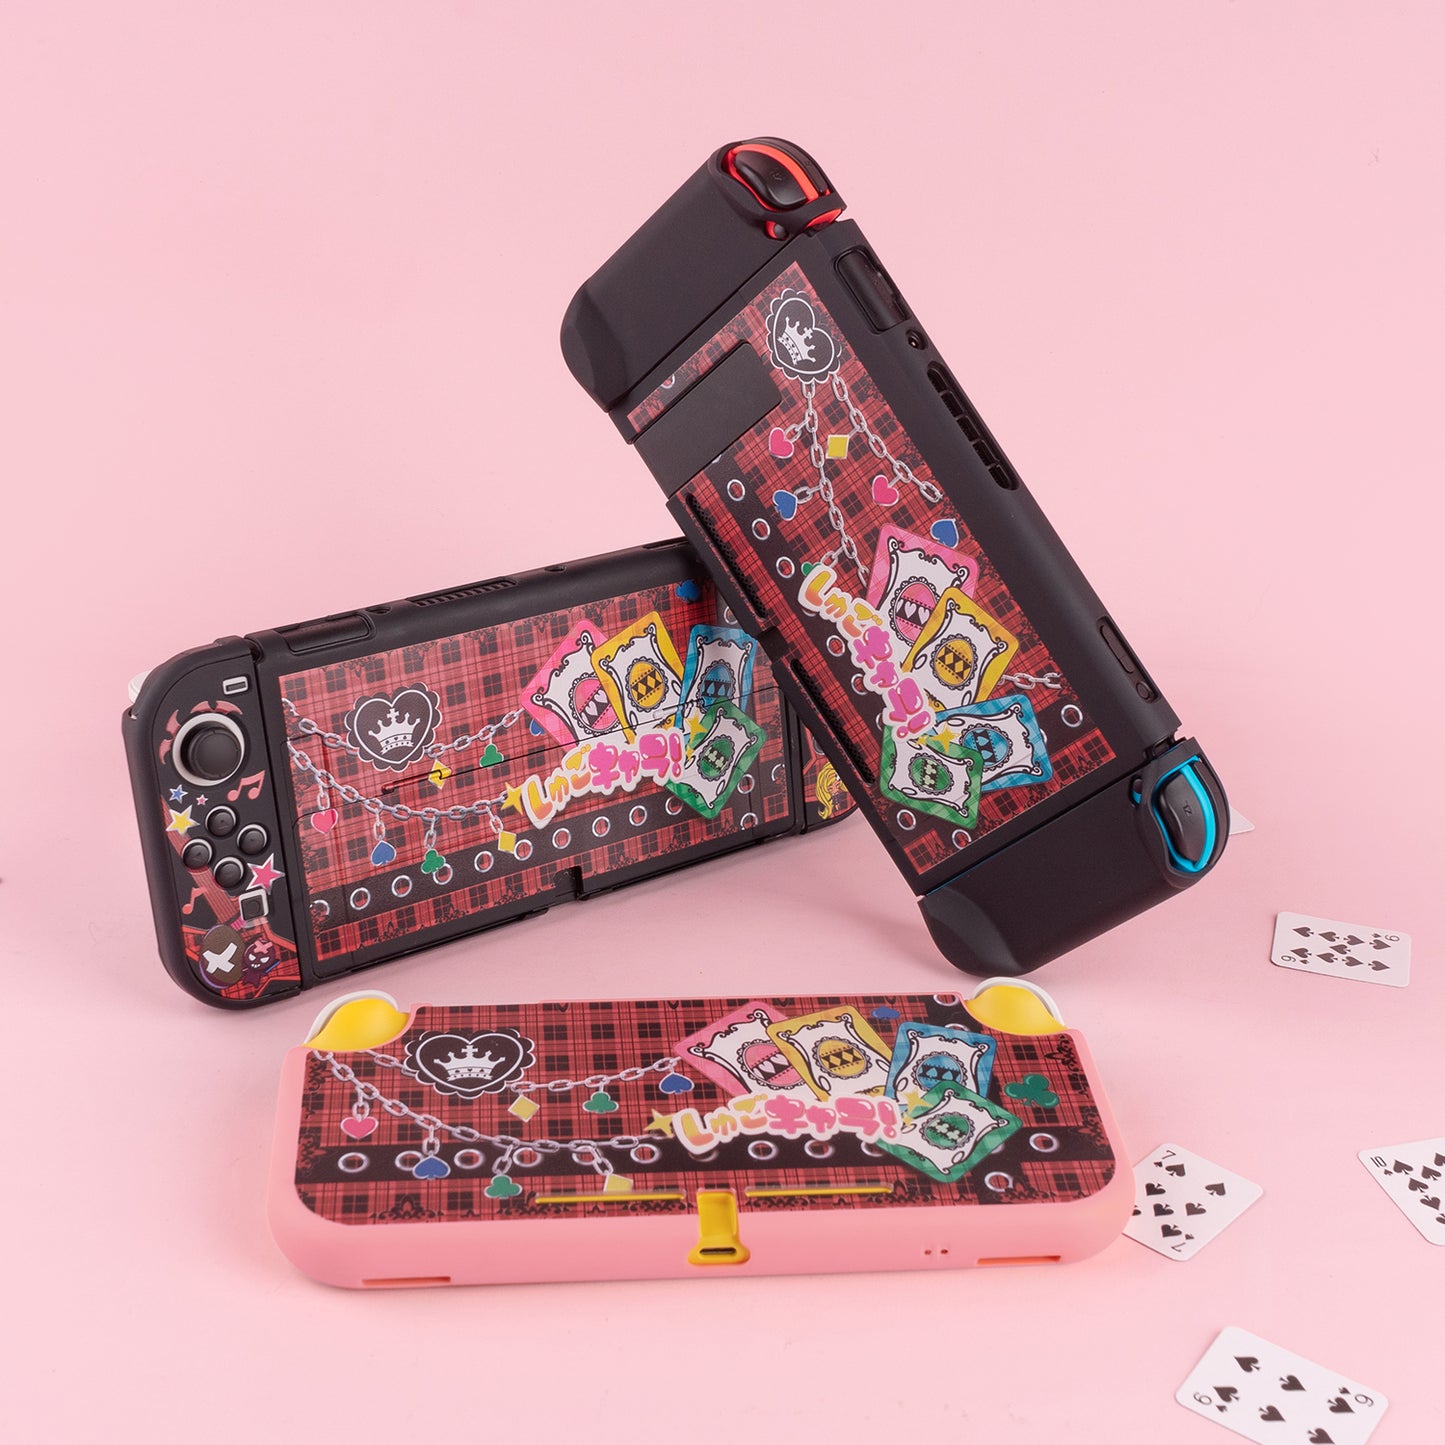 BlingKiyo Shugo Chara Amulet Nintendo Switch Accessories Series/Game Card Case